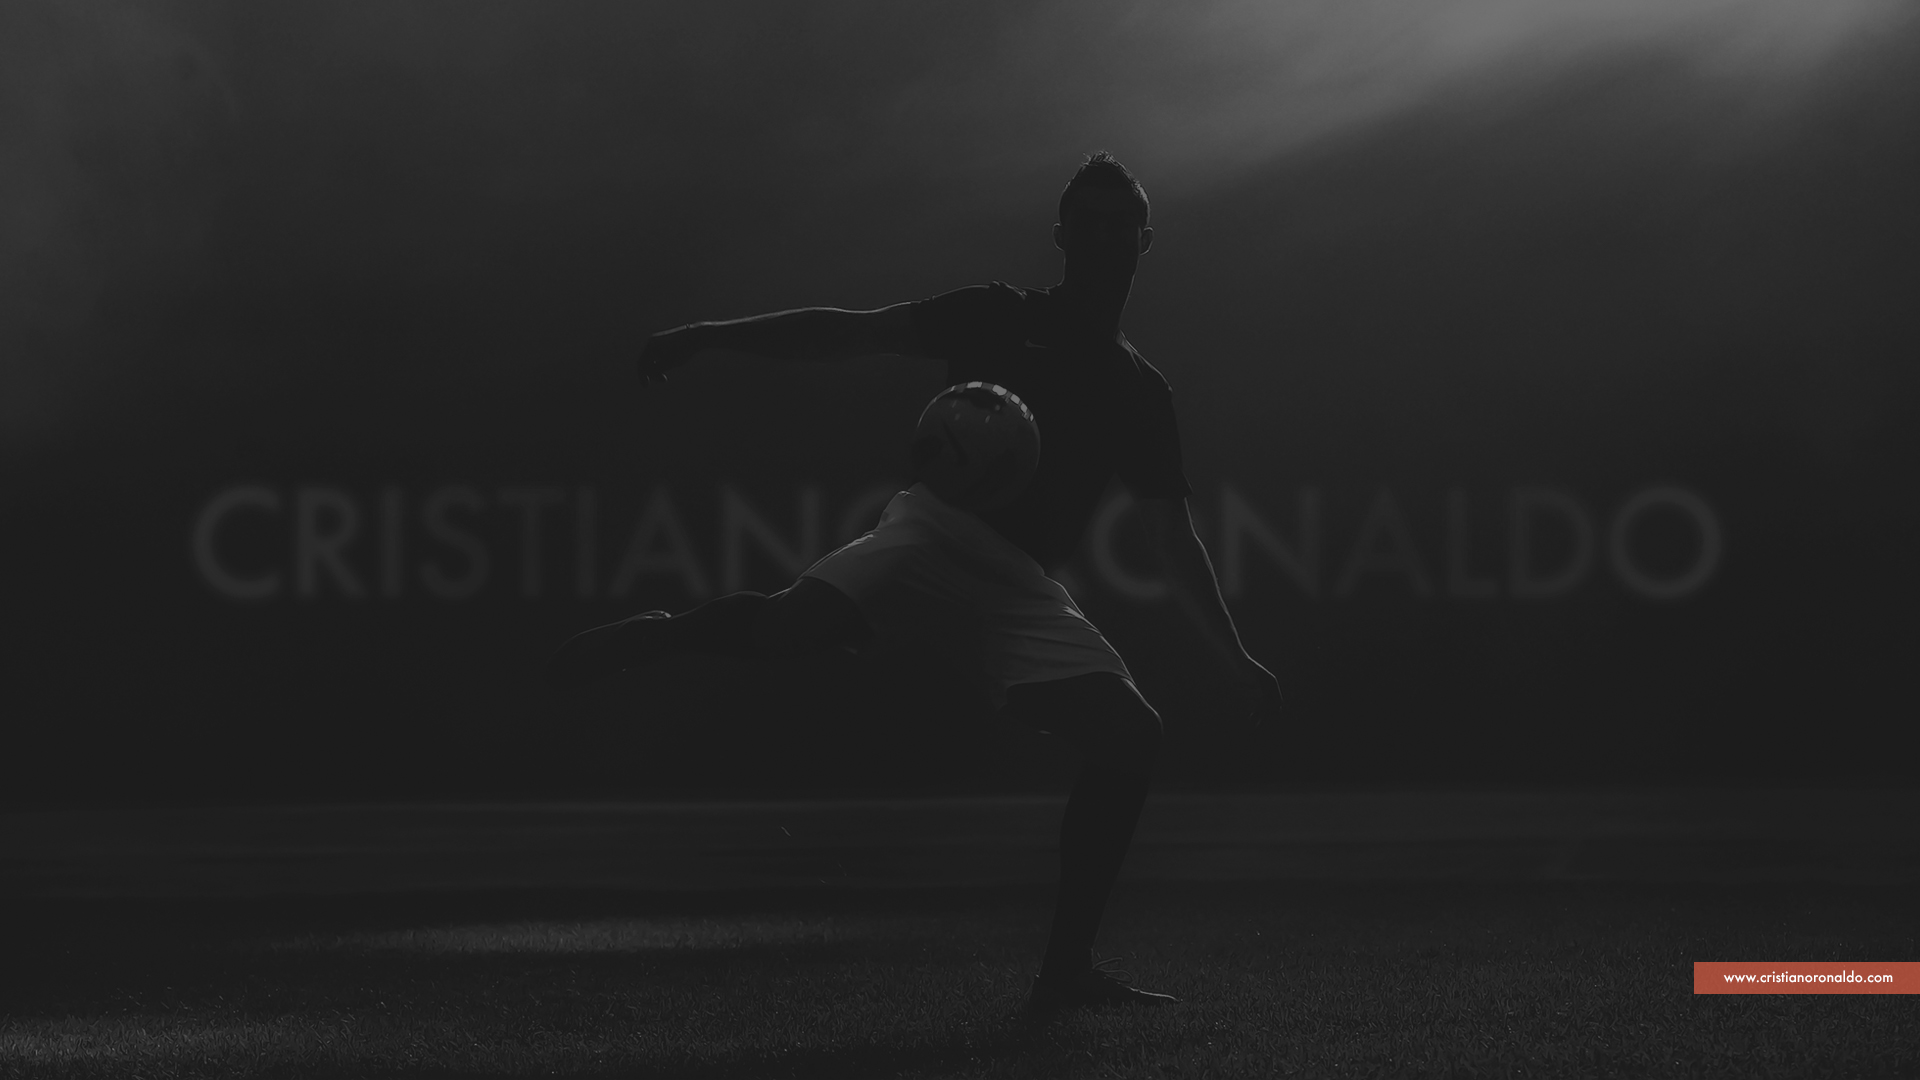 Cristiano Ronaldo Wallpaper Full HD Sporteology